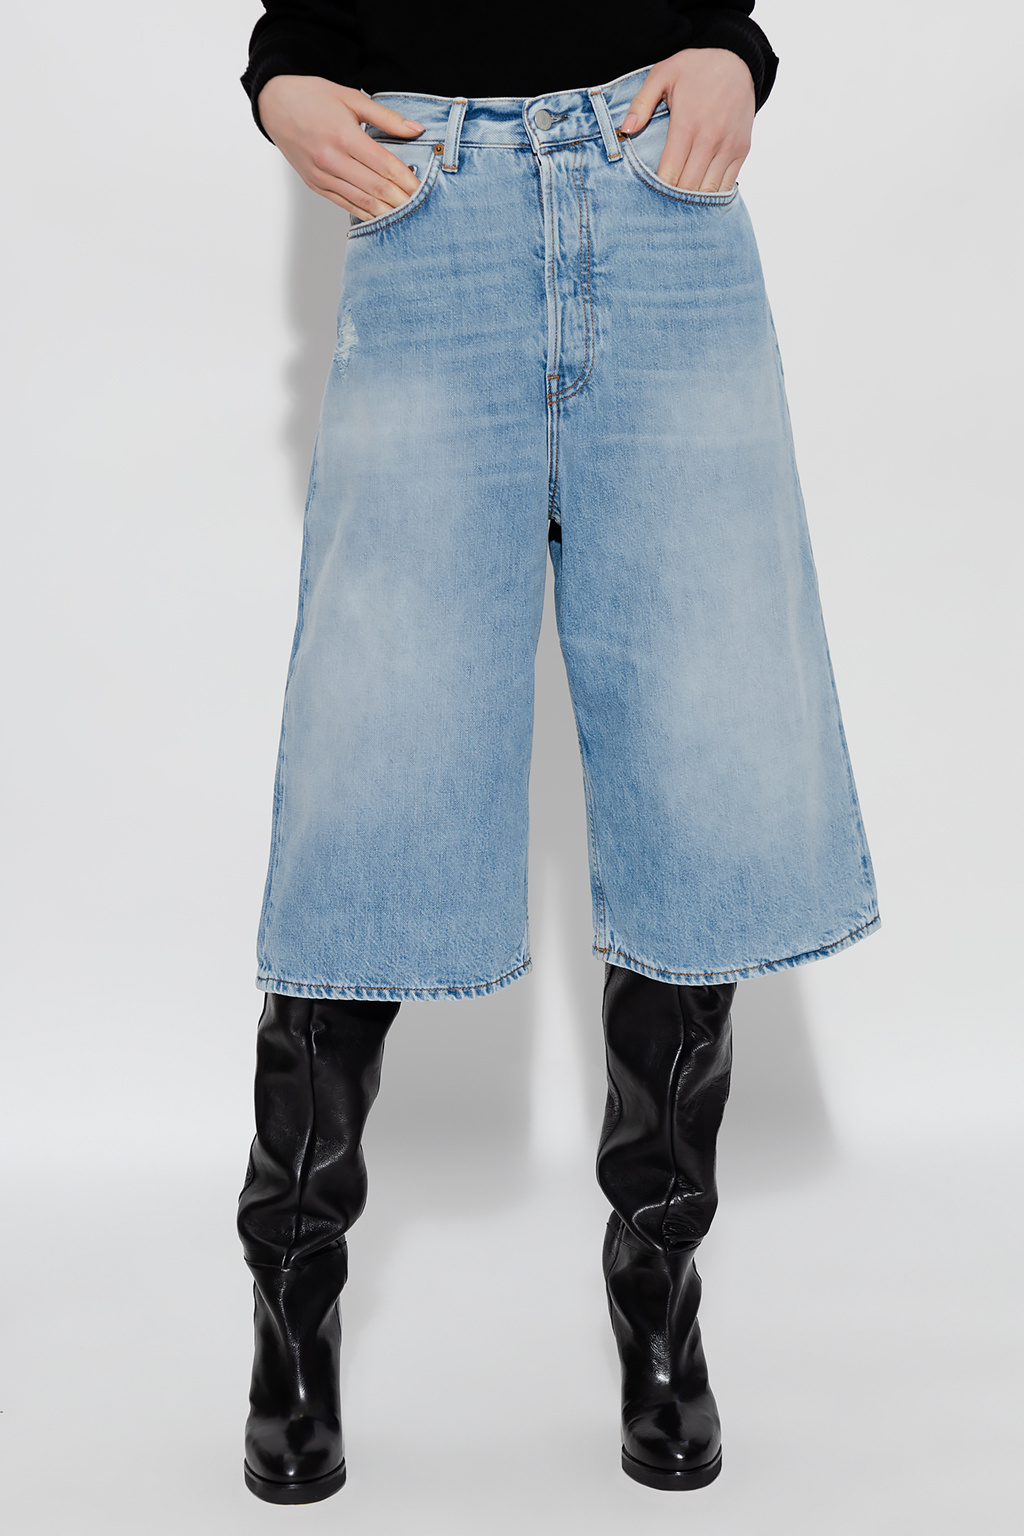 Acne Studios midi jeans with wide legs